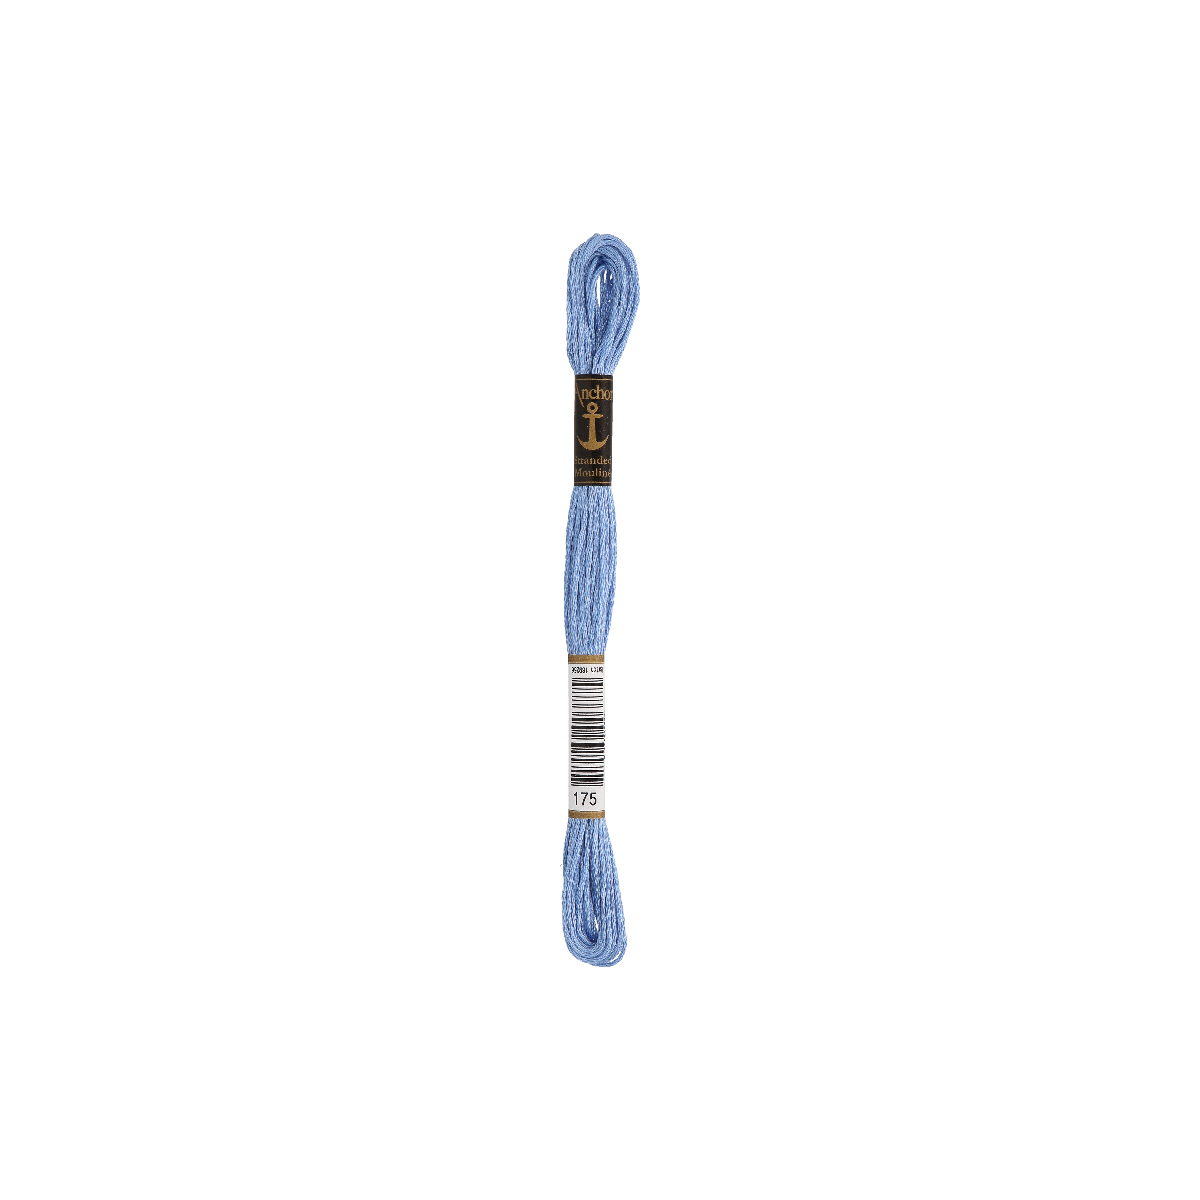 Anchor Torsade 8m, bleu, coton, couleur 175, 6 fils